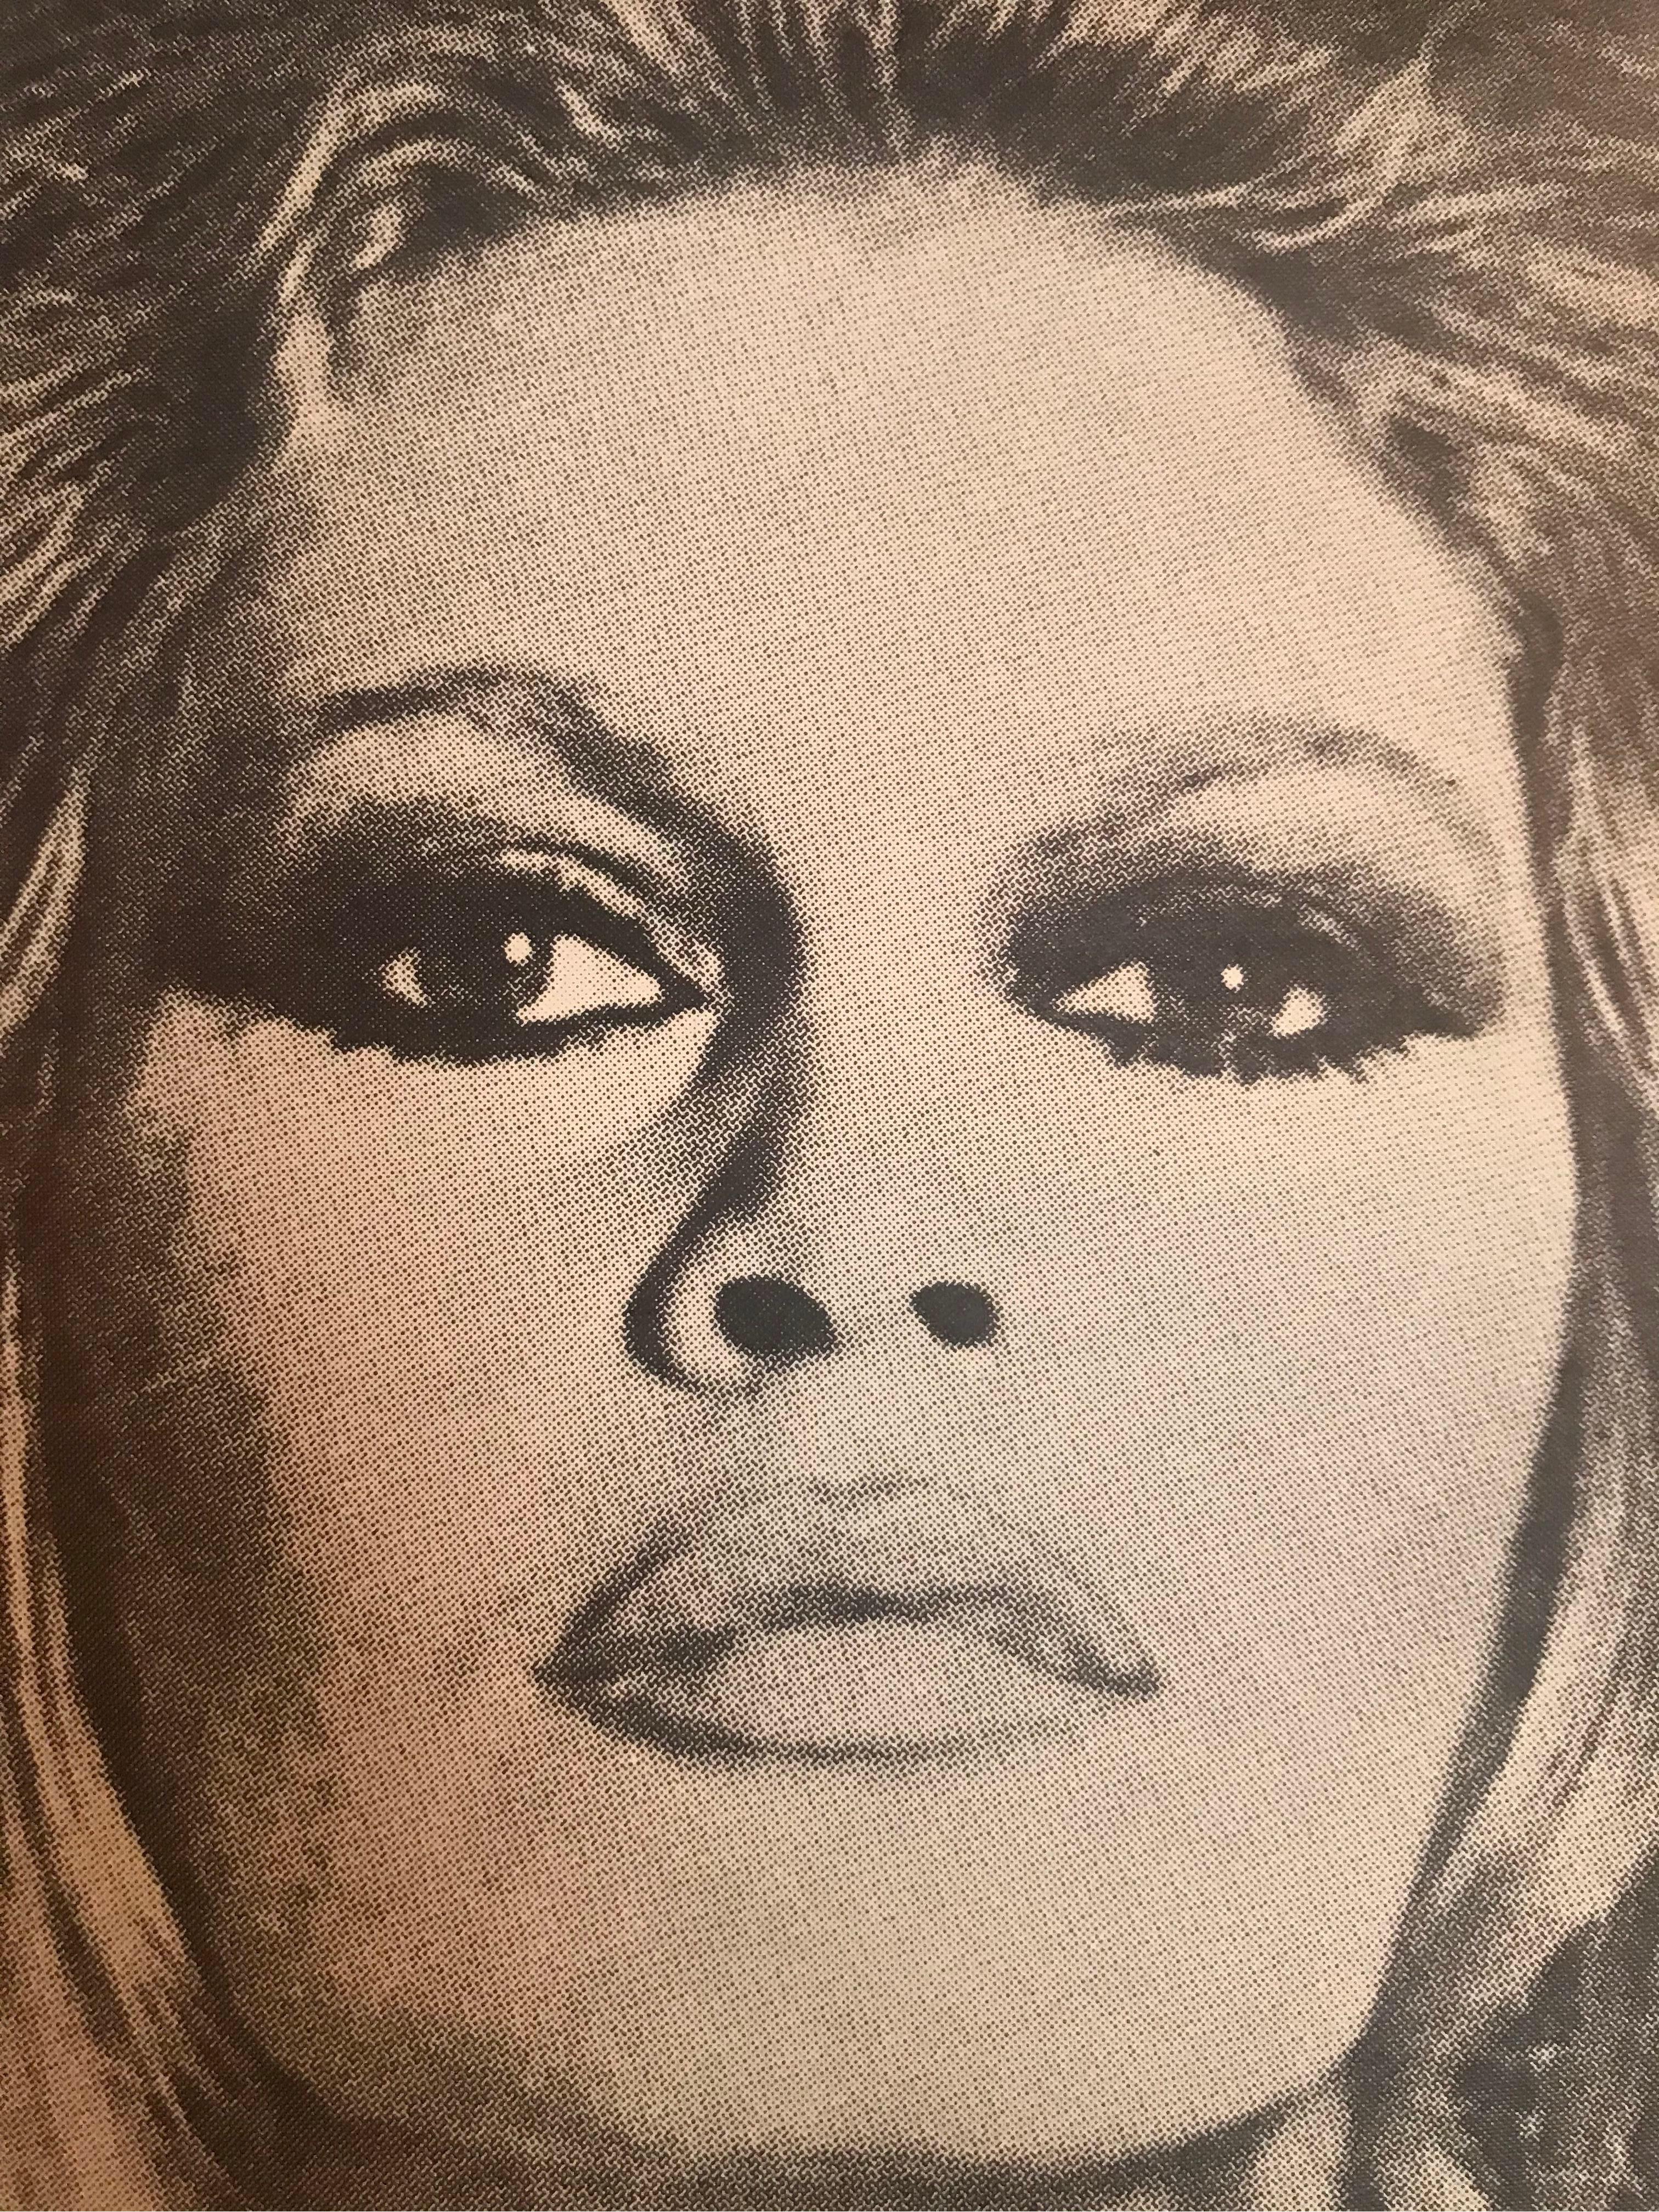 Modern Original Iconic and Rare Vintage Brigitte Bardot Poster from 1970